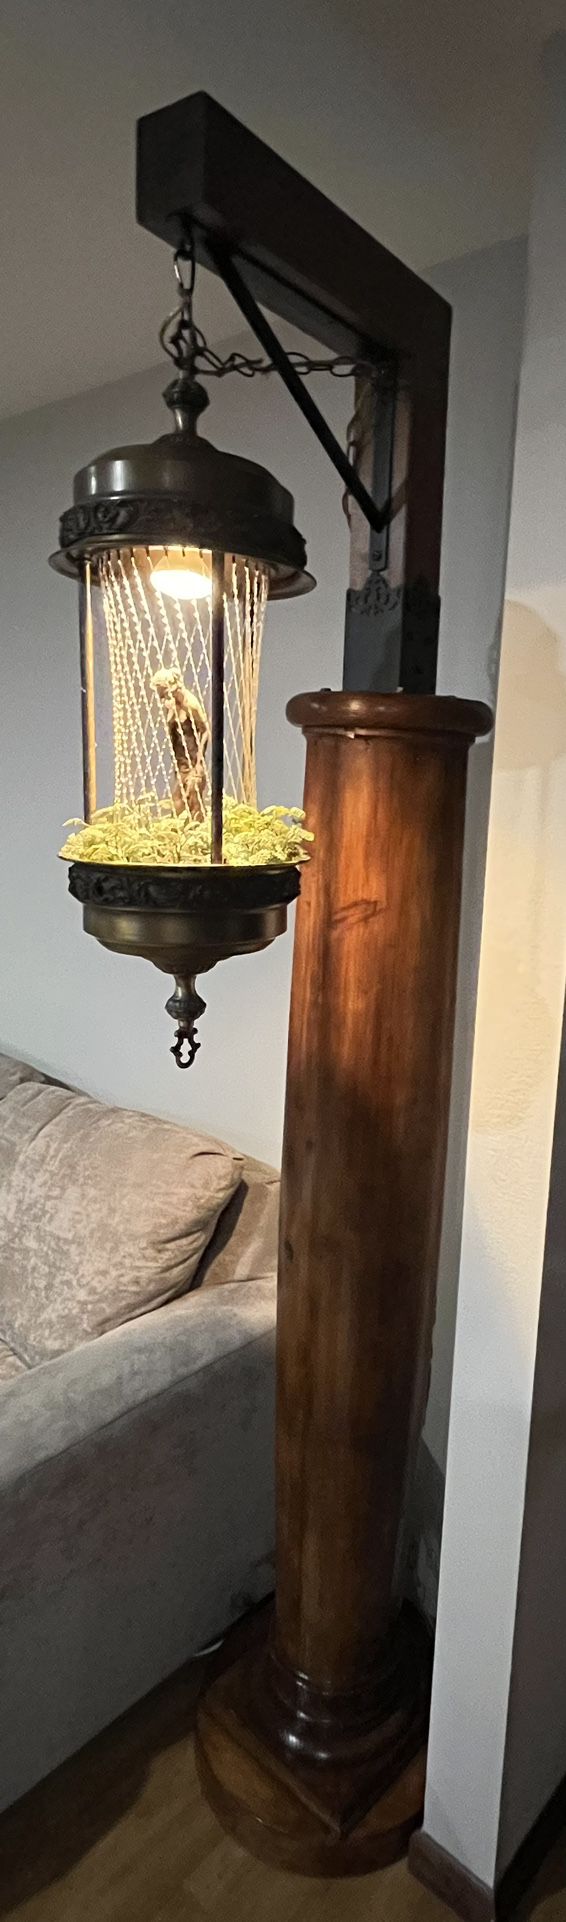 Rain Oil Lamp With Wood Column 